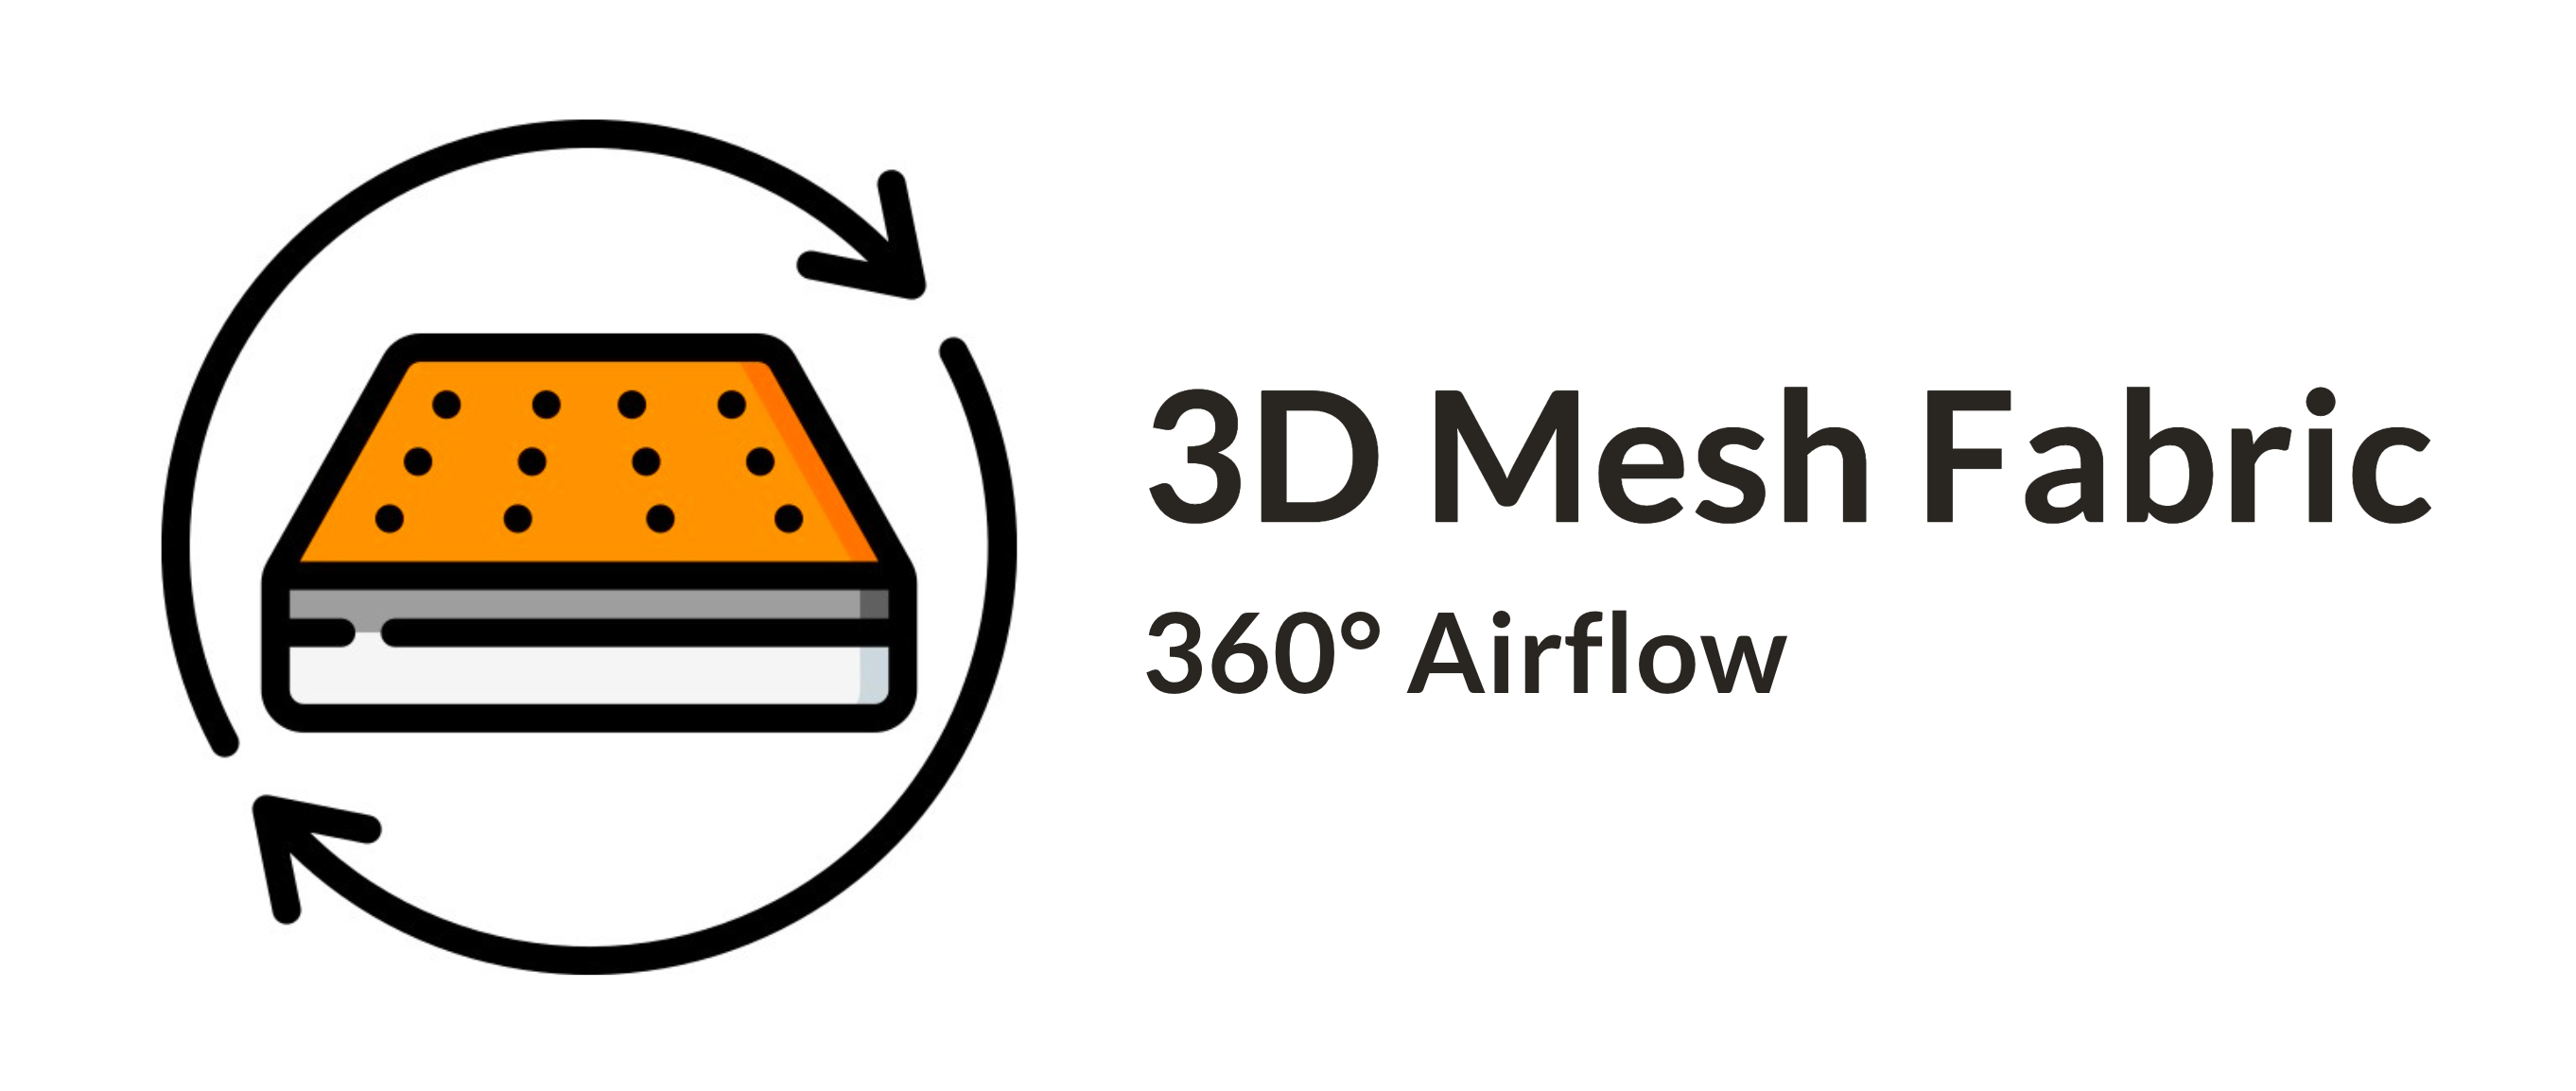 3D Mesh Fabric